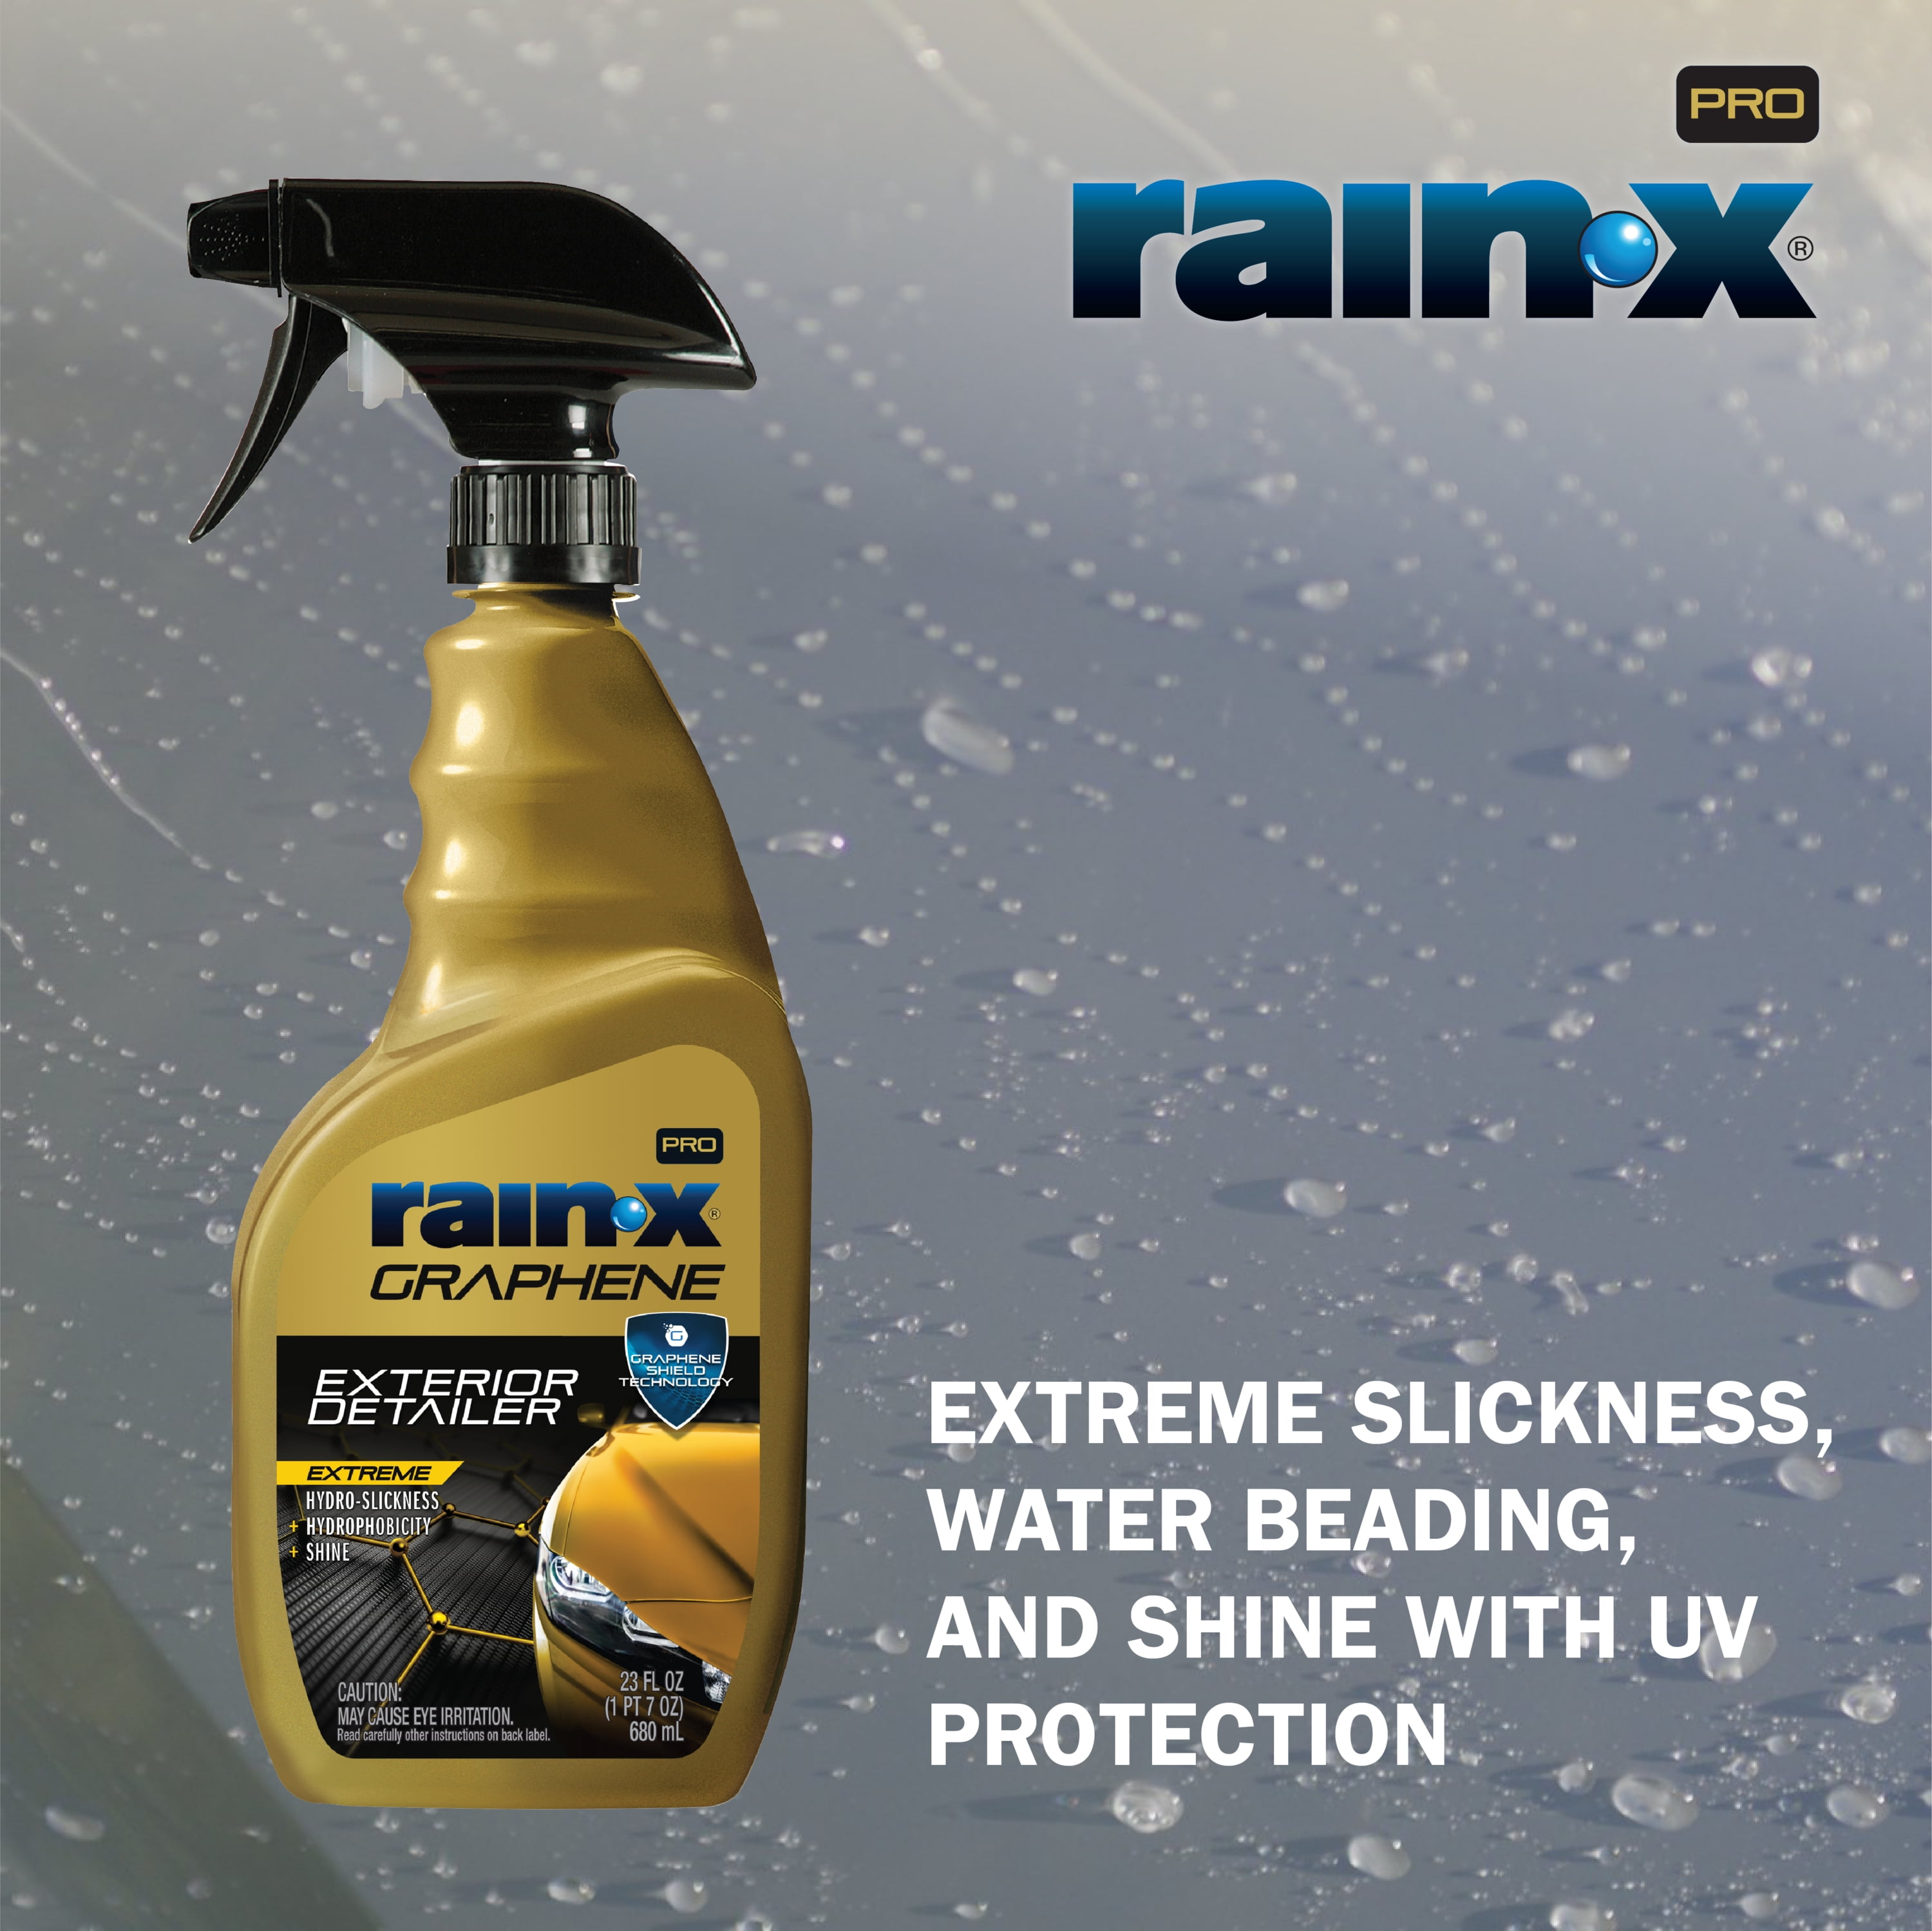 Glass Water Repellent Dynamax Rain Off, 500ml - DMAX502051 - Pro Detailing